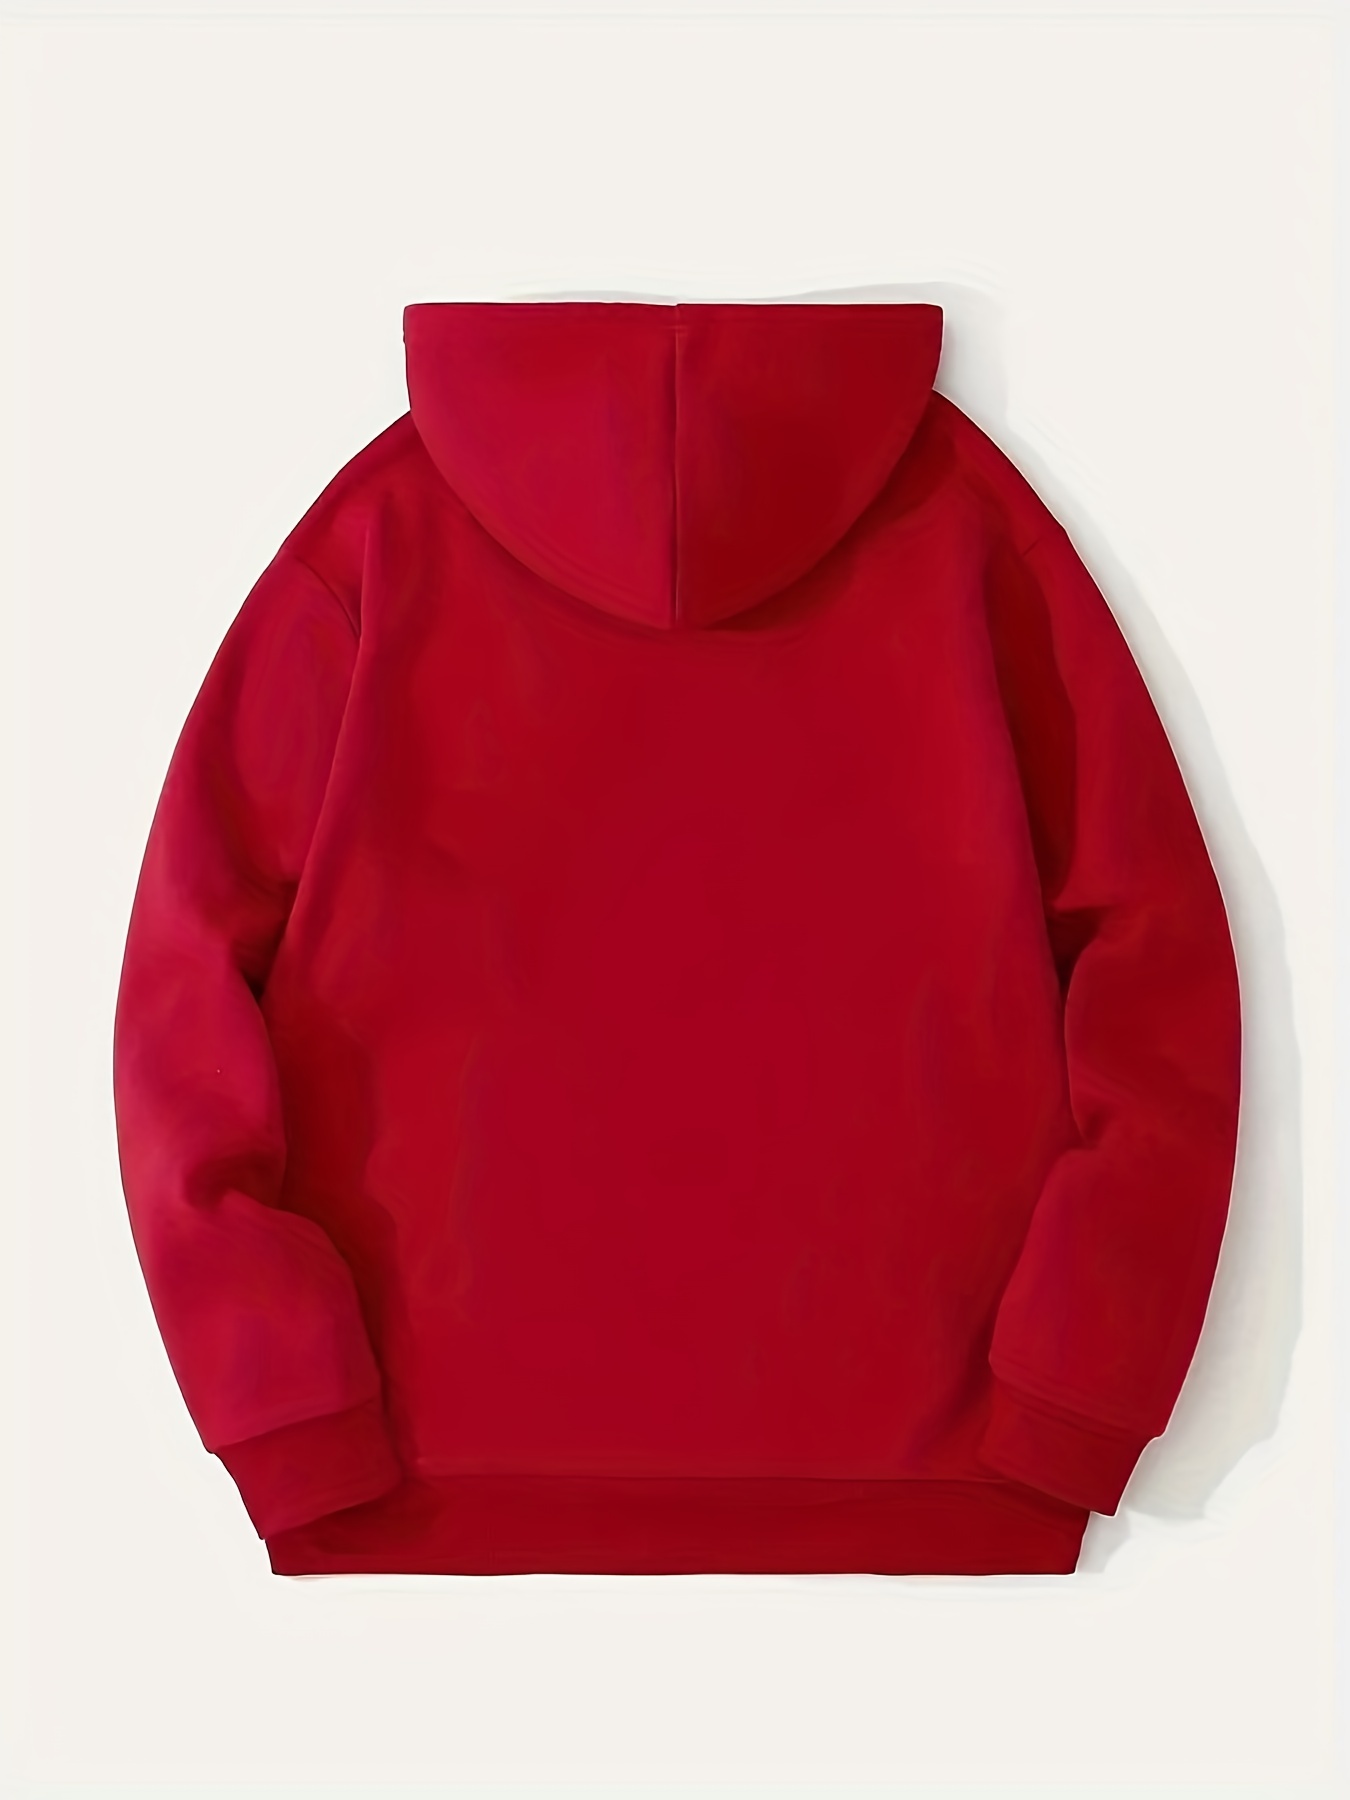 headphone smile print hoodie hoodies for men mens casual graphic design pullover hooded sweatshirt with kangaroo pocket streetwear for winter fall as gifts details 11